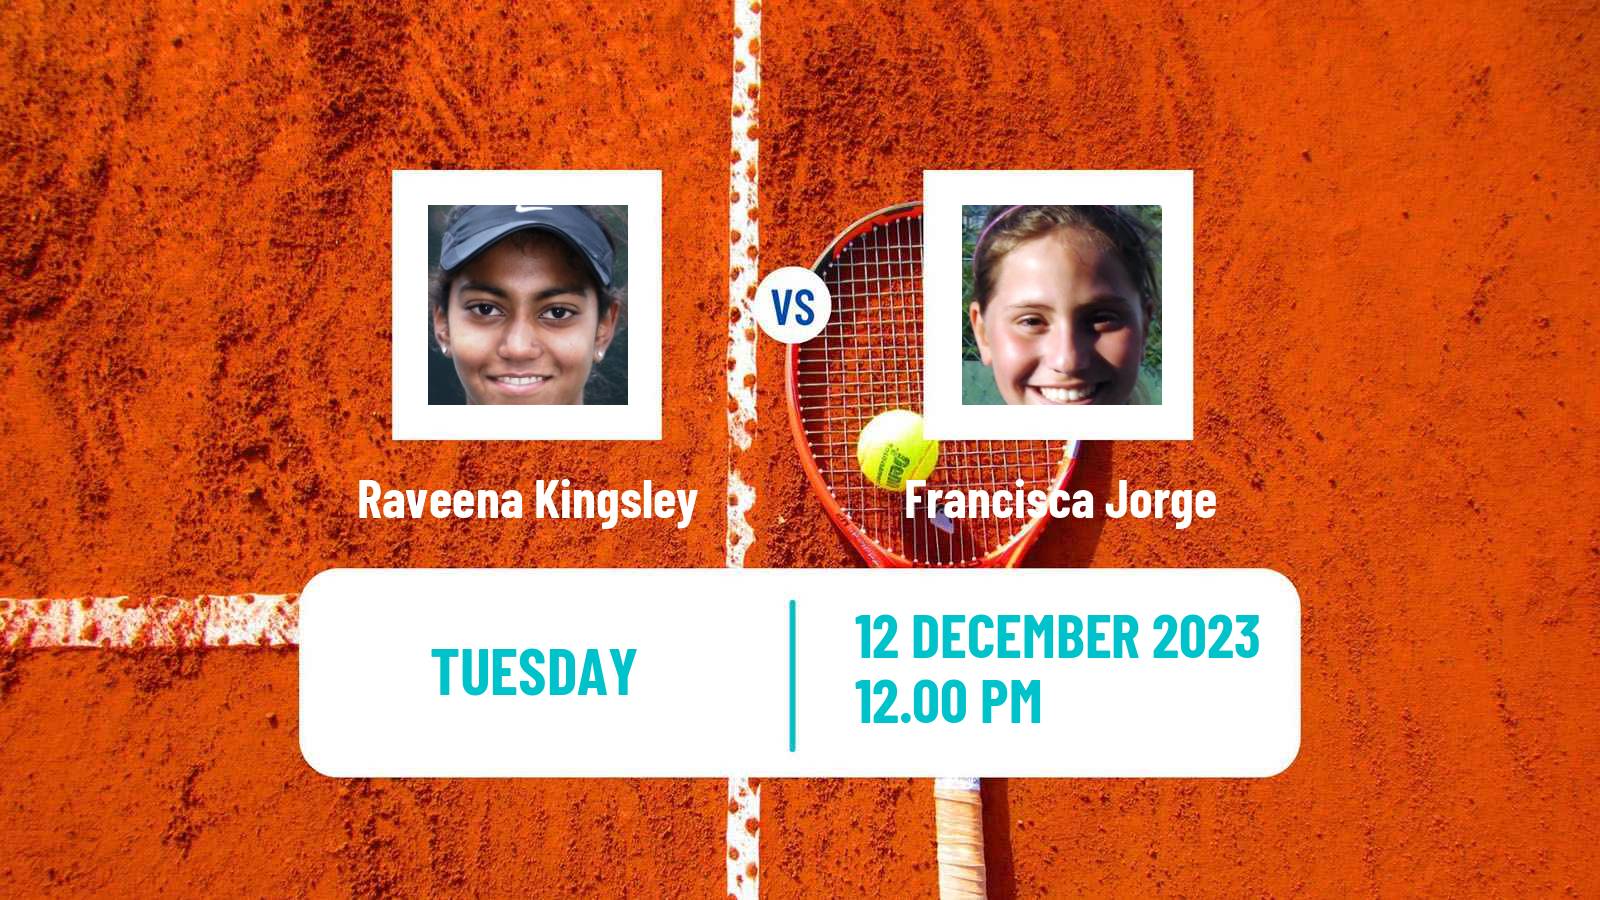 Tennis ITF W60 Vacaria Women Raveena Kingsley - Francisca Jorge